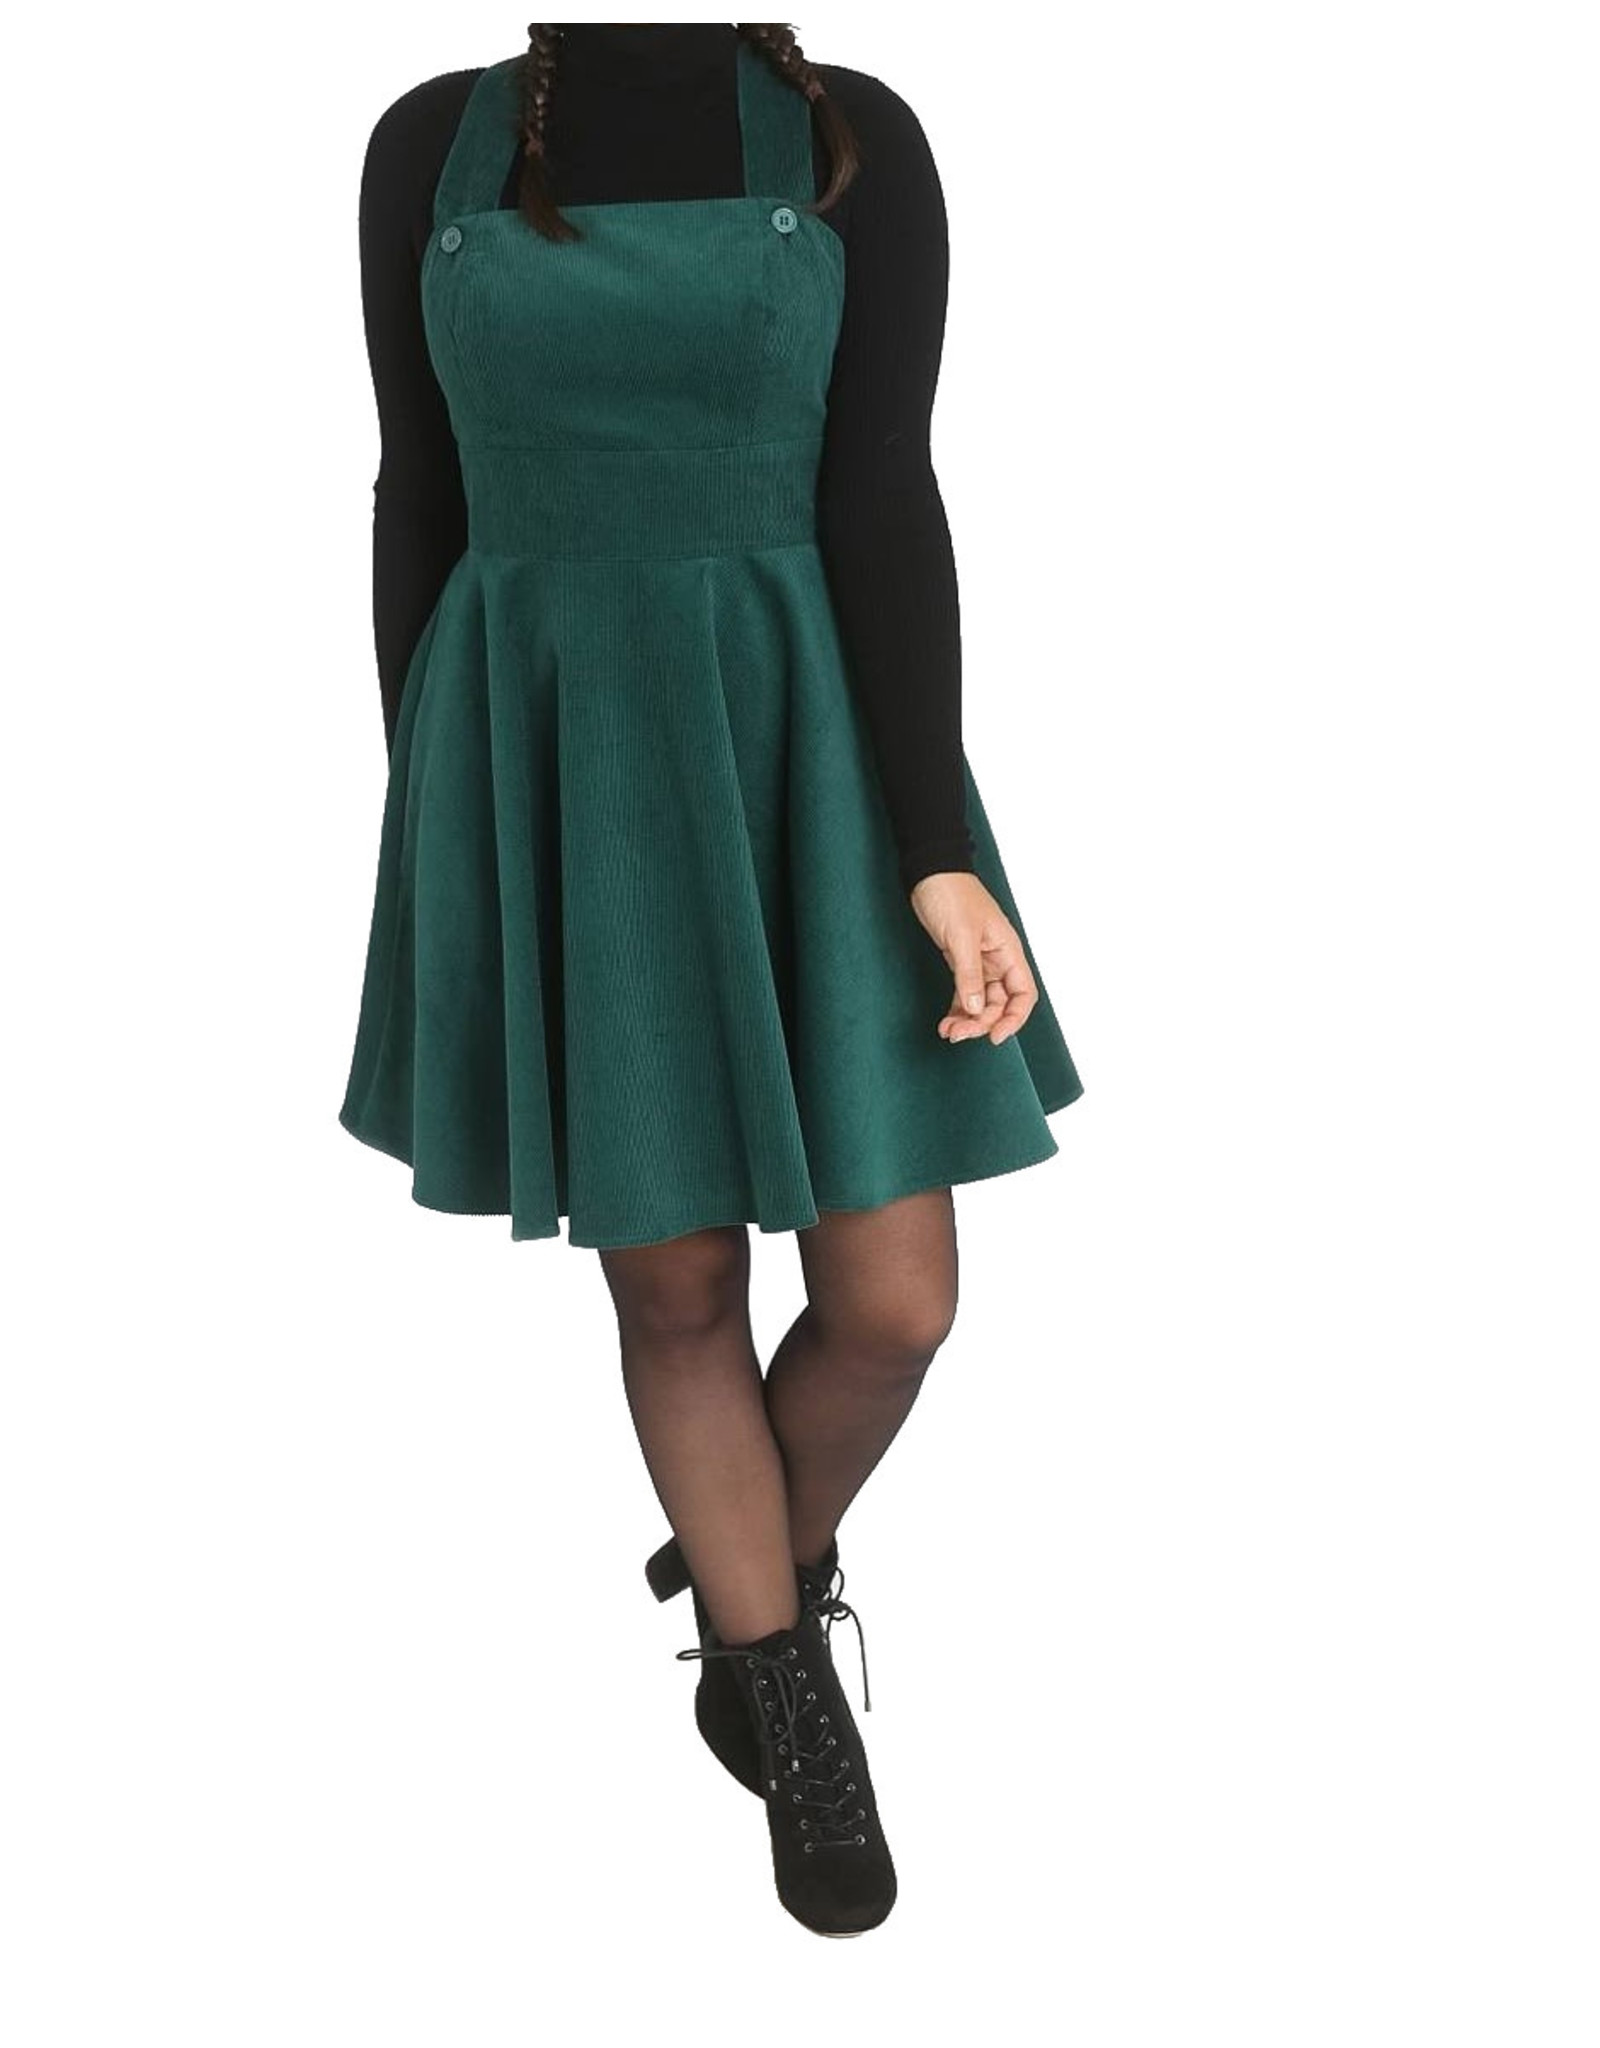 HELL BUNNY - Wonders Years Dark Green Pinafore Dress